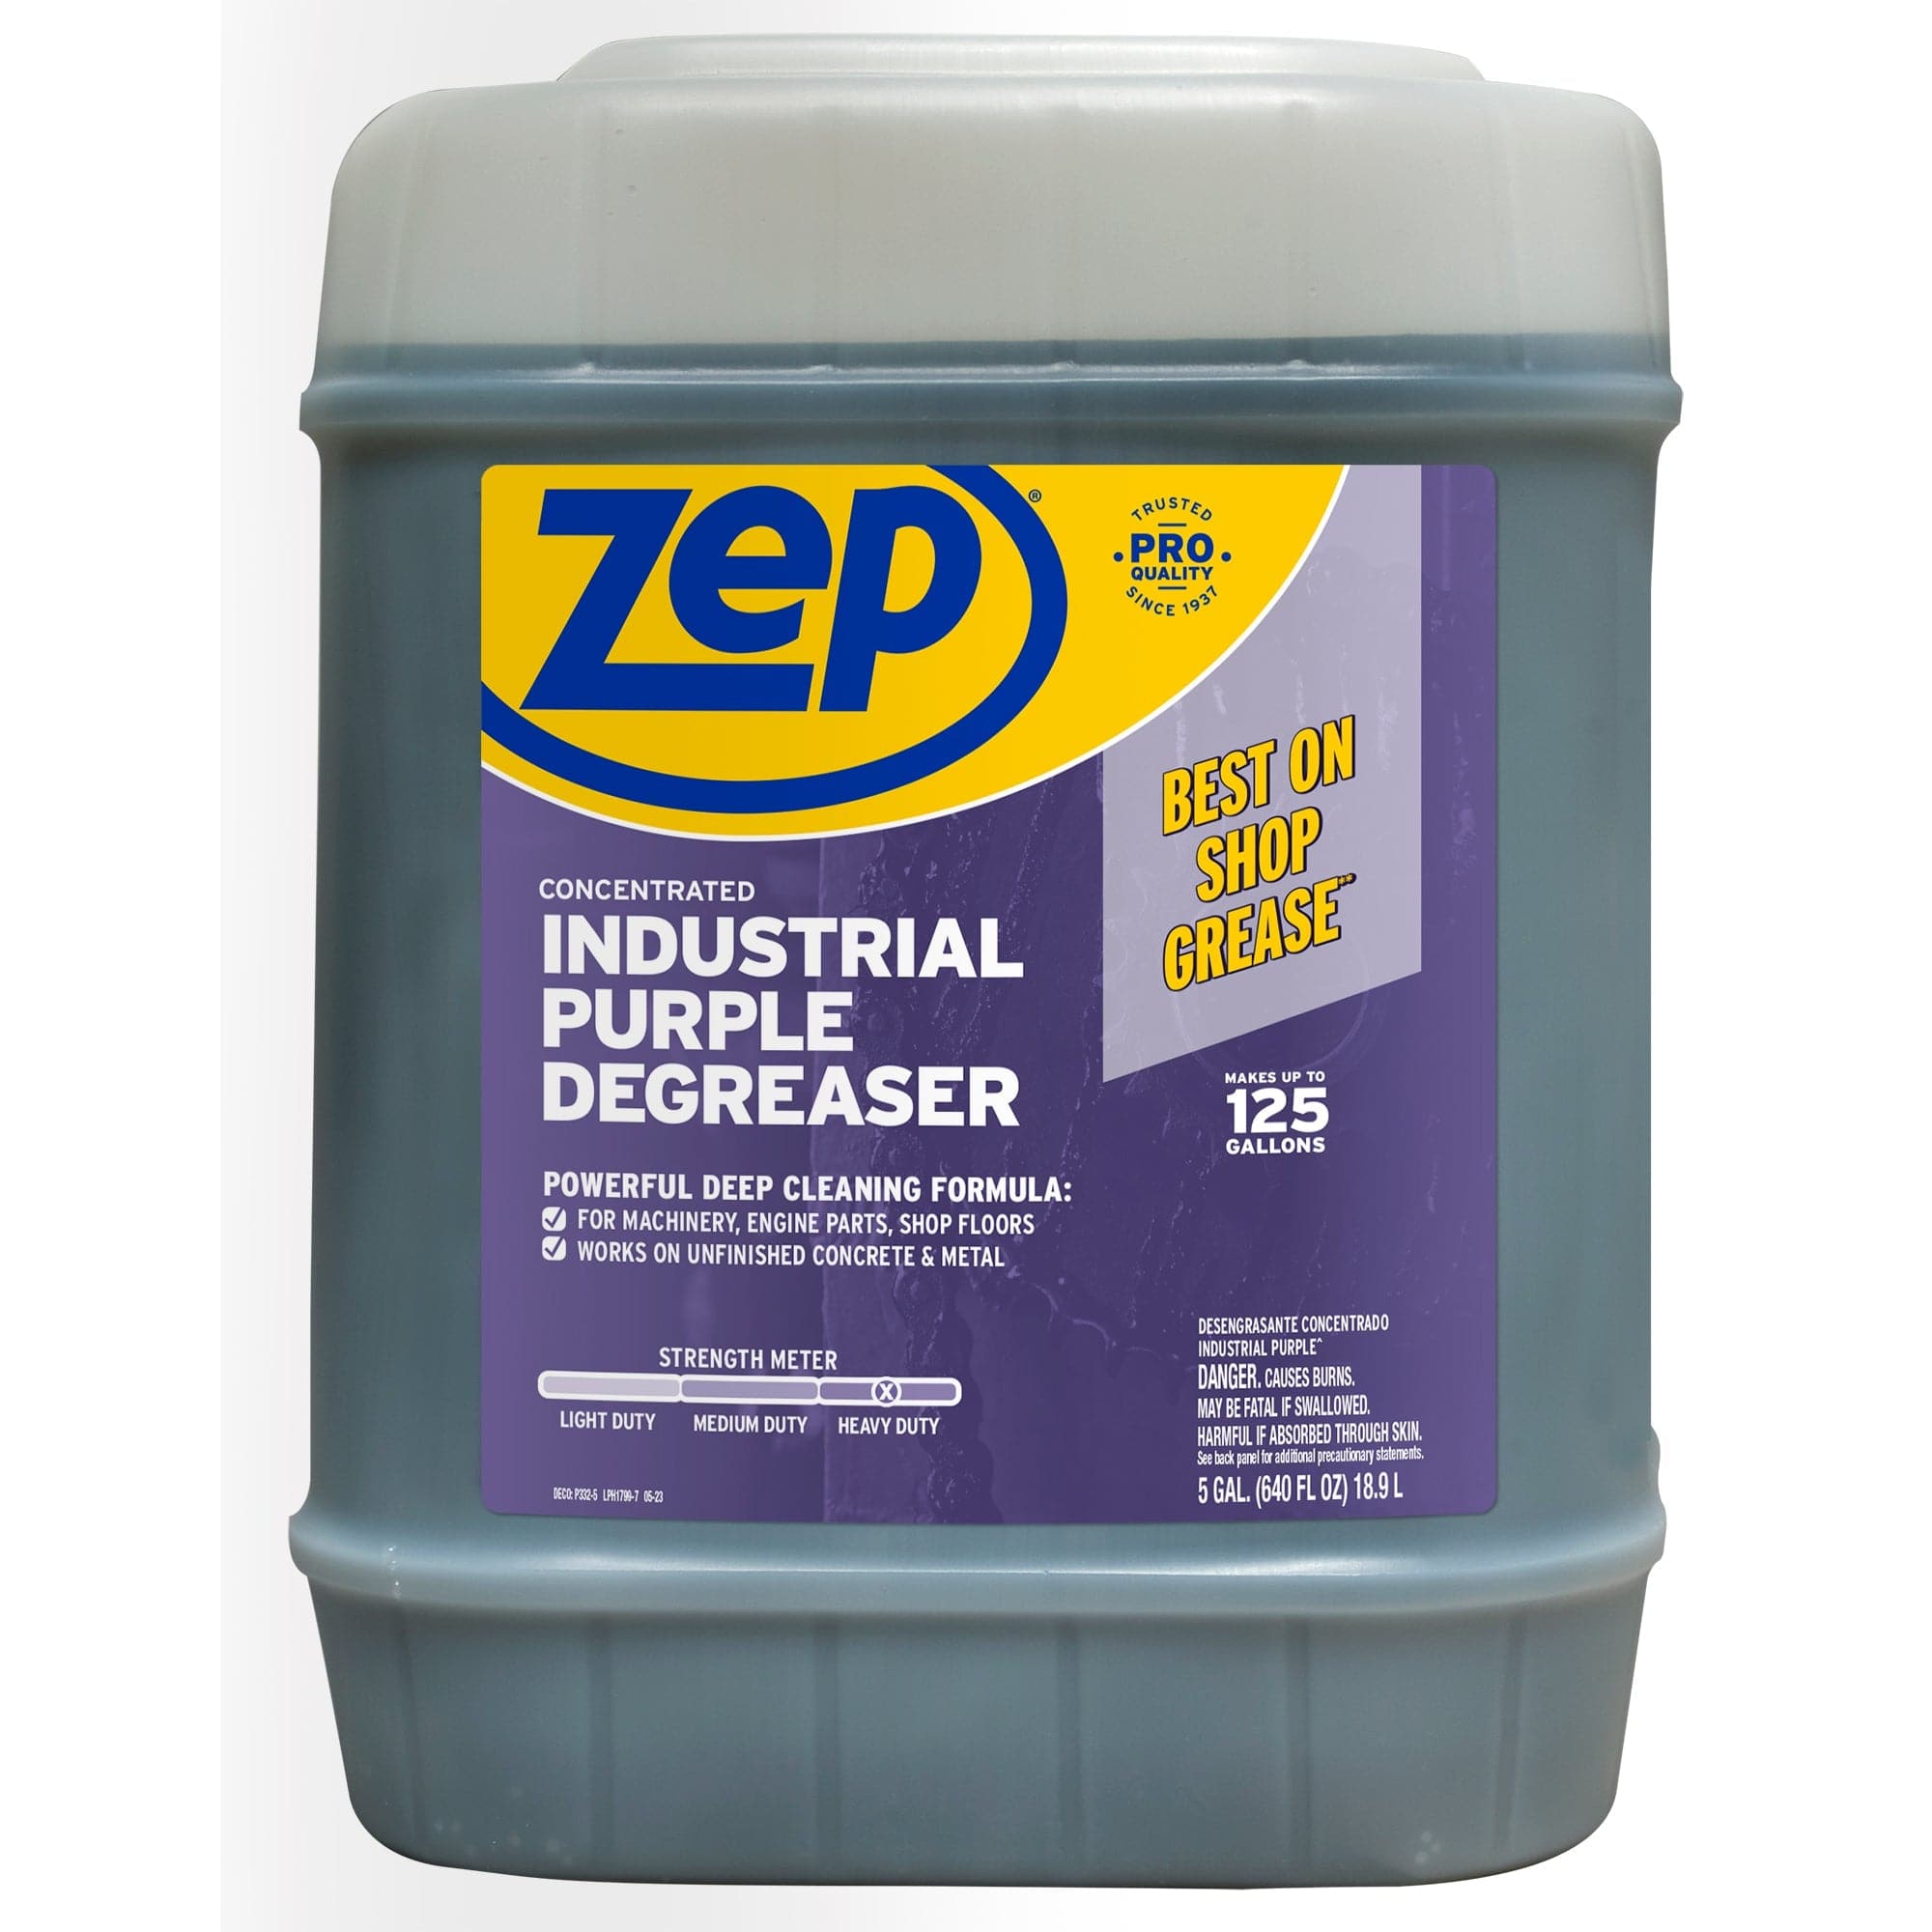 Zep Glass Cleaner, Zep Cleaner, Zep Lubricant, Zep Degreaser, Zep, Industrial Cleaning Supply